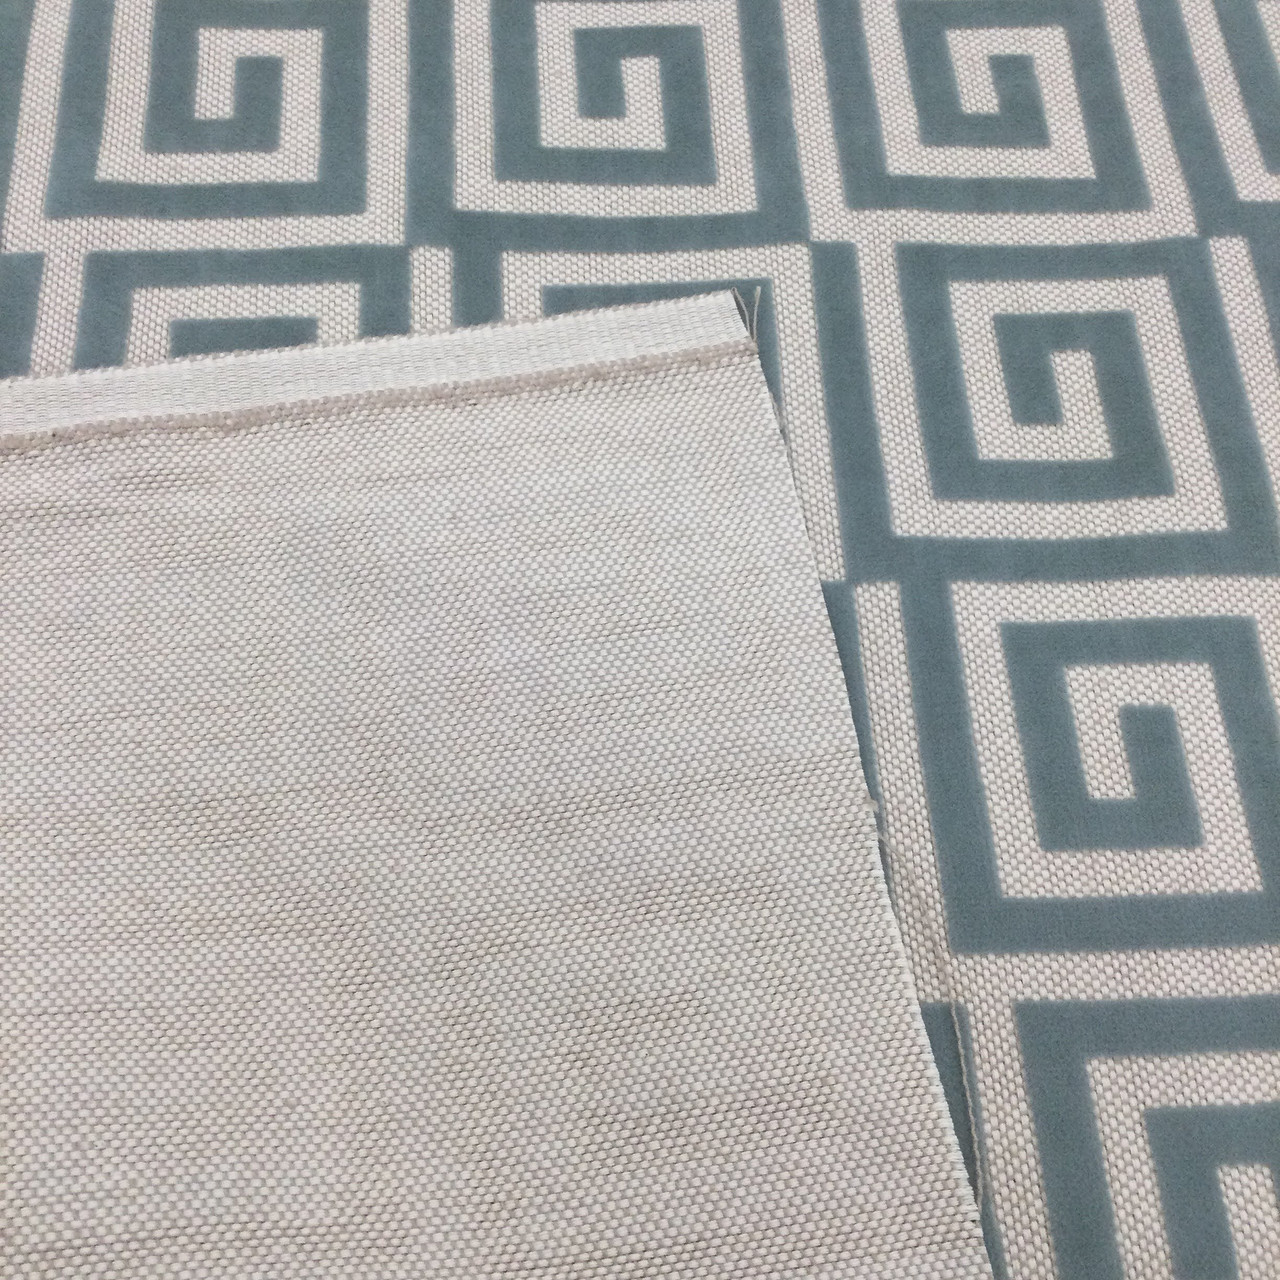 Zoe CL Teal Velvet Upholstery Fabric by DeLeo Textiles – OverStock  Upholstery Fabrics